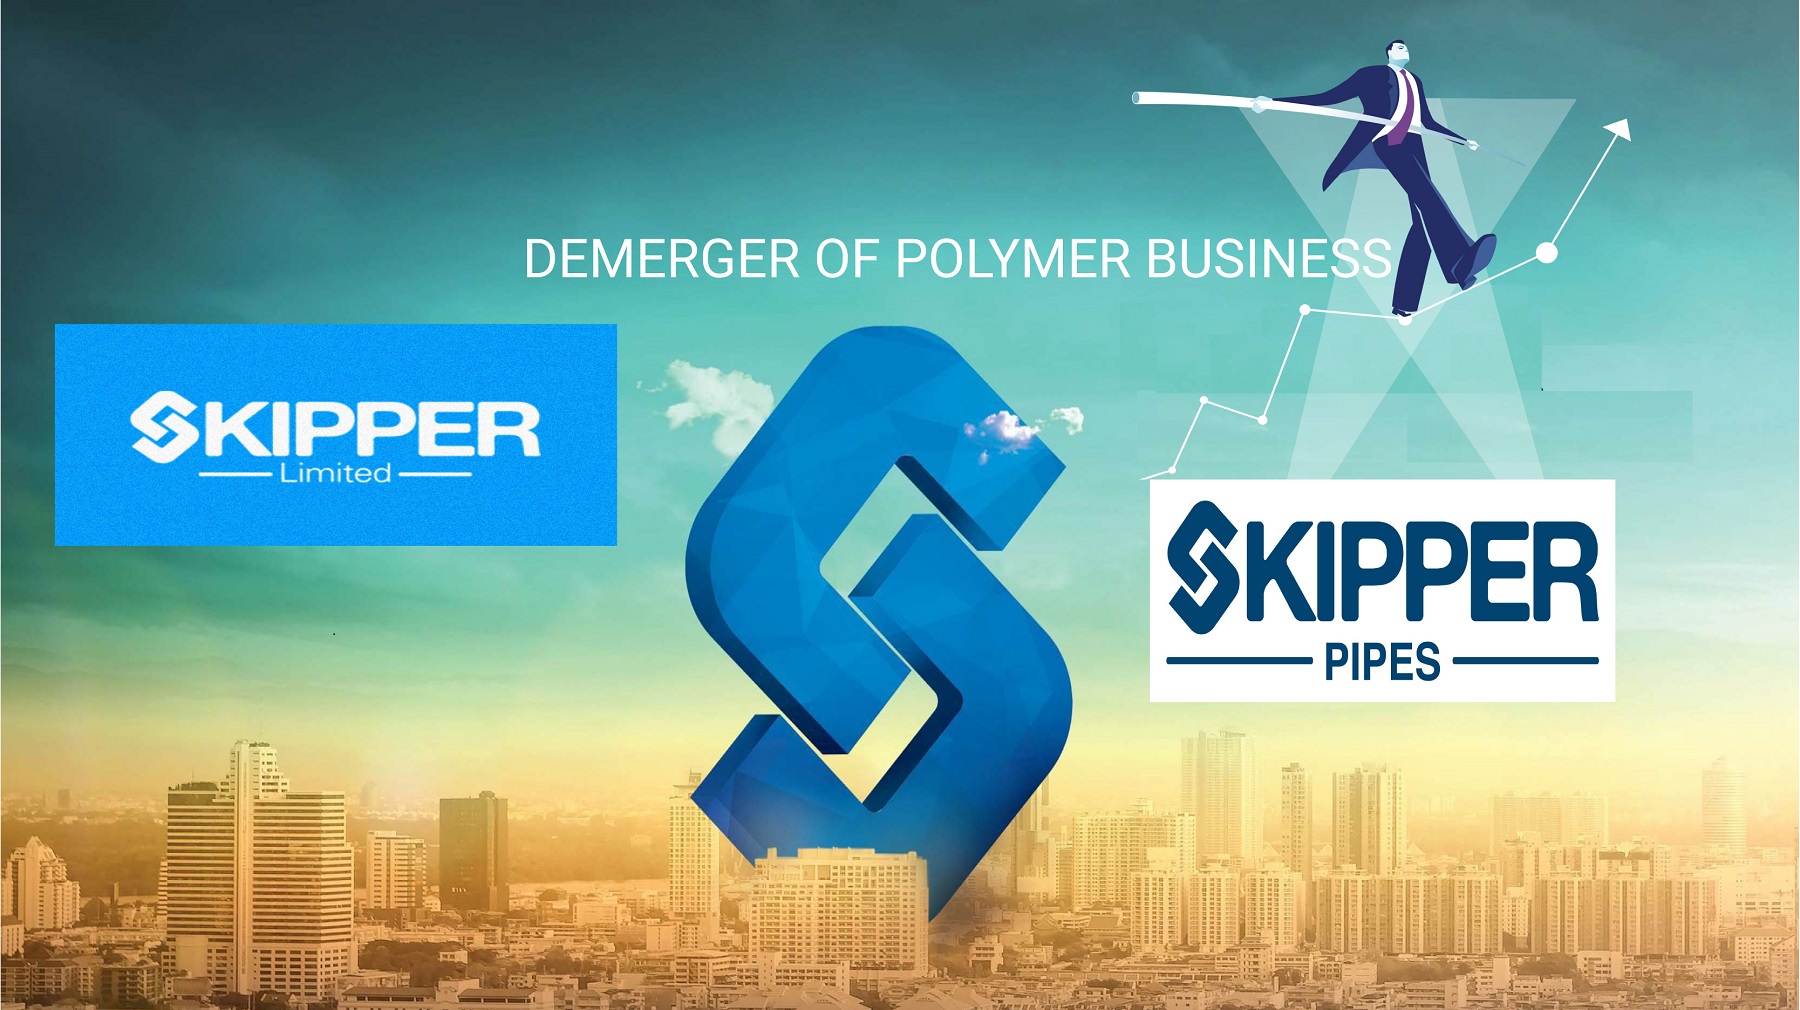 Skipper-Polymer-Demerger-Growth